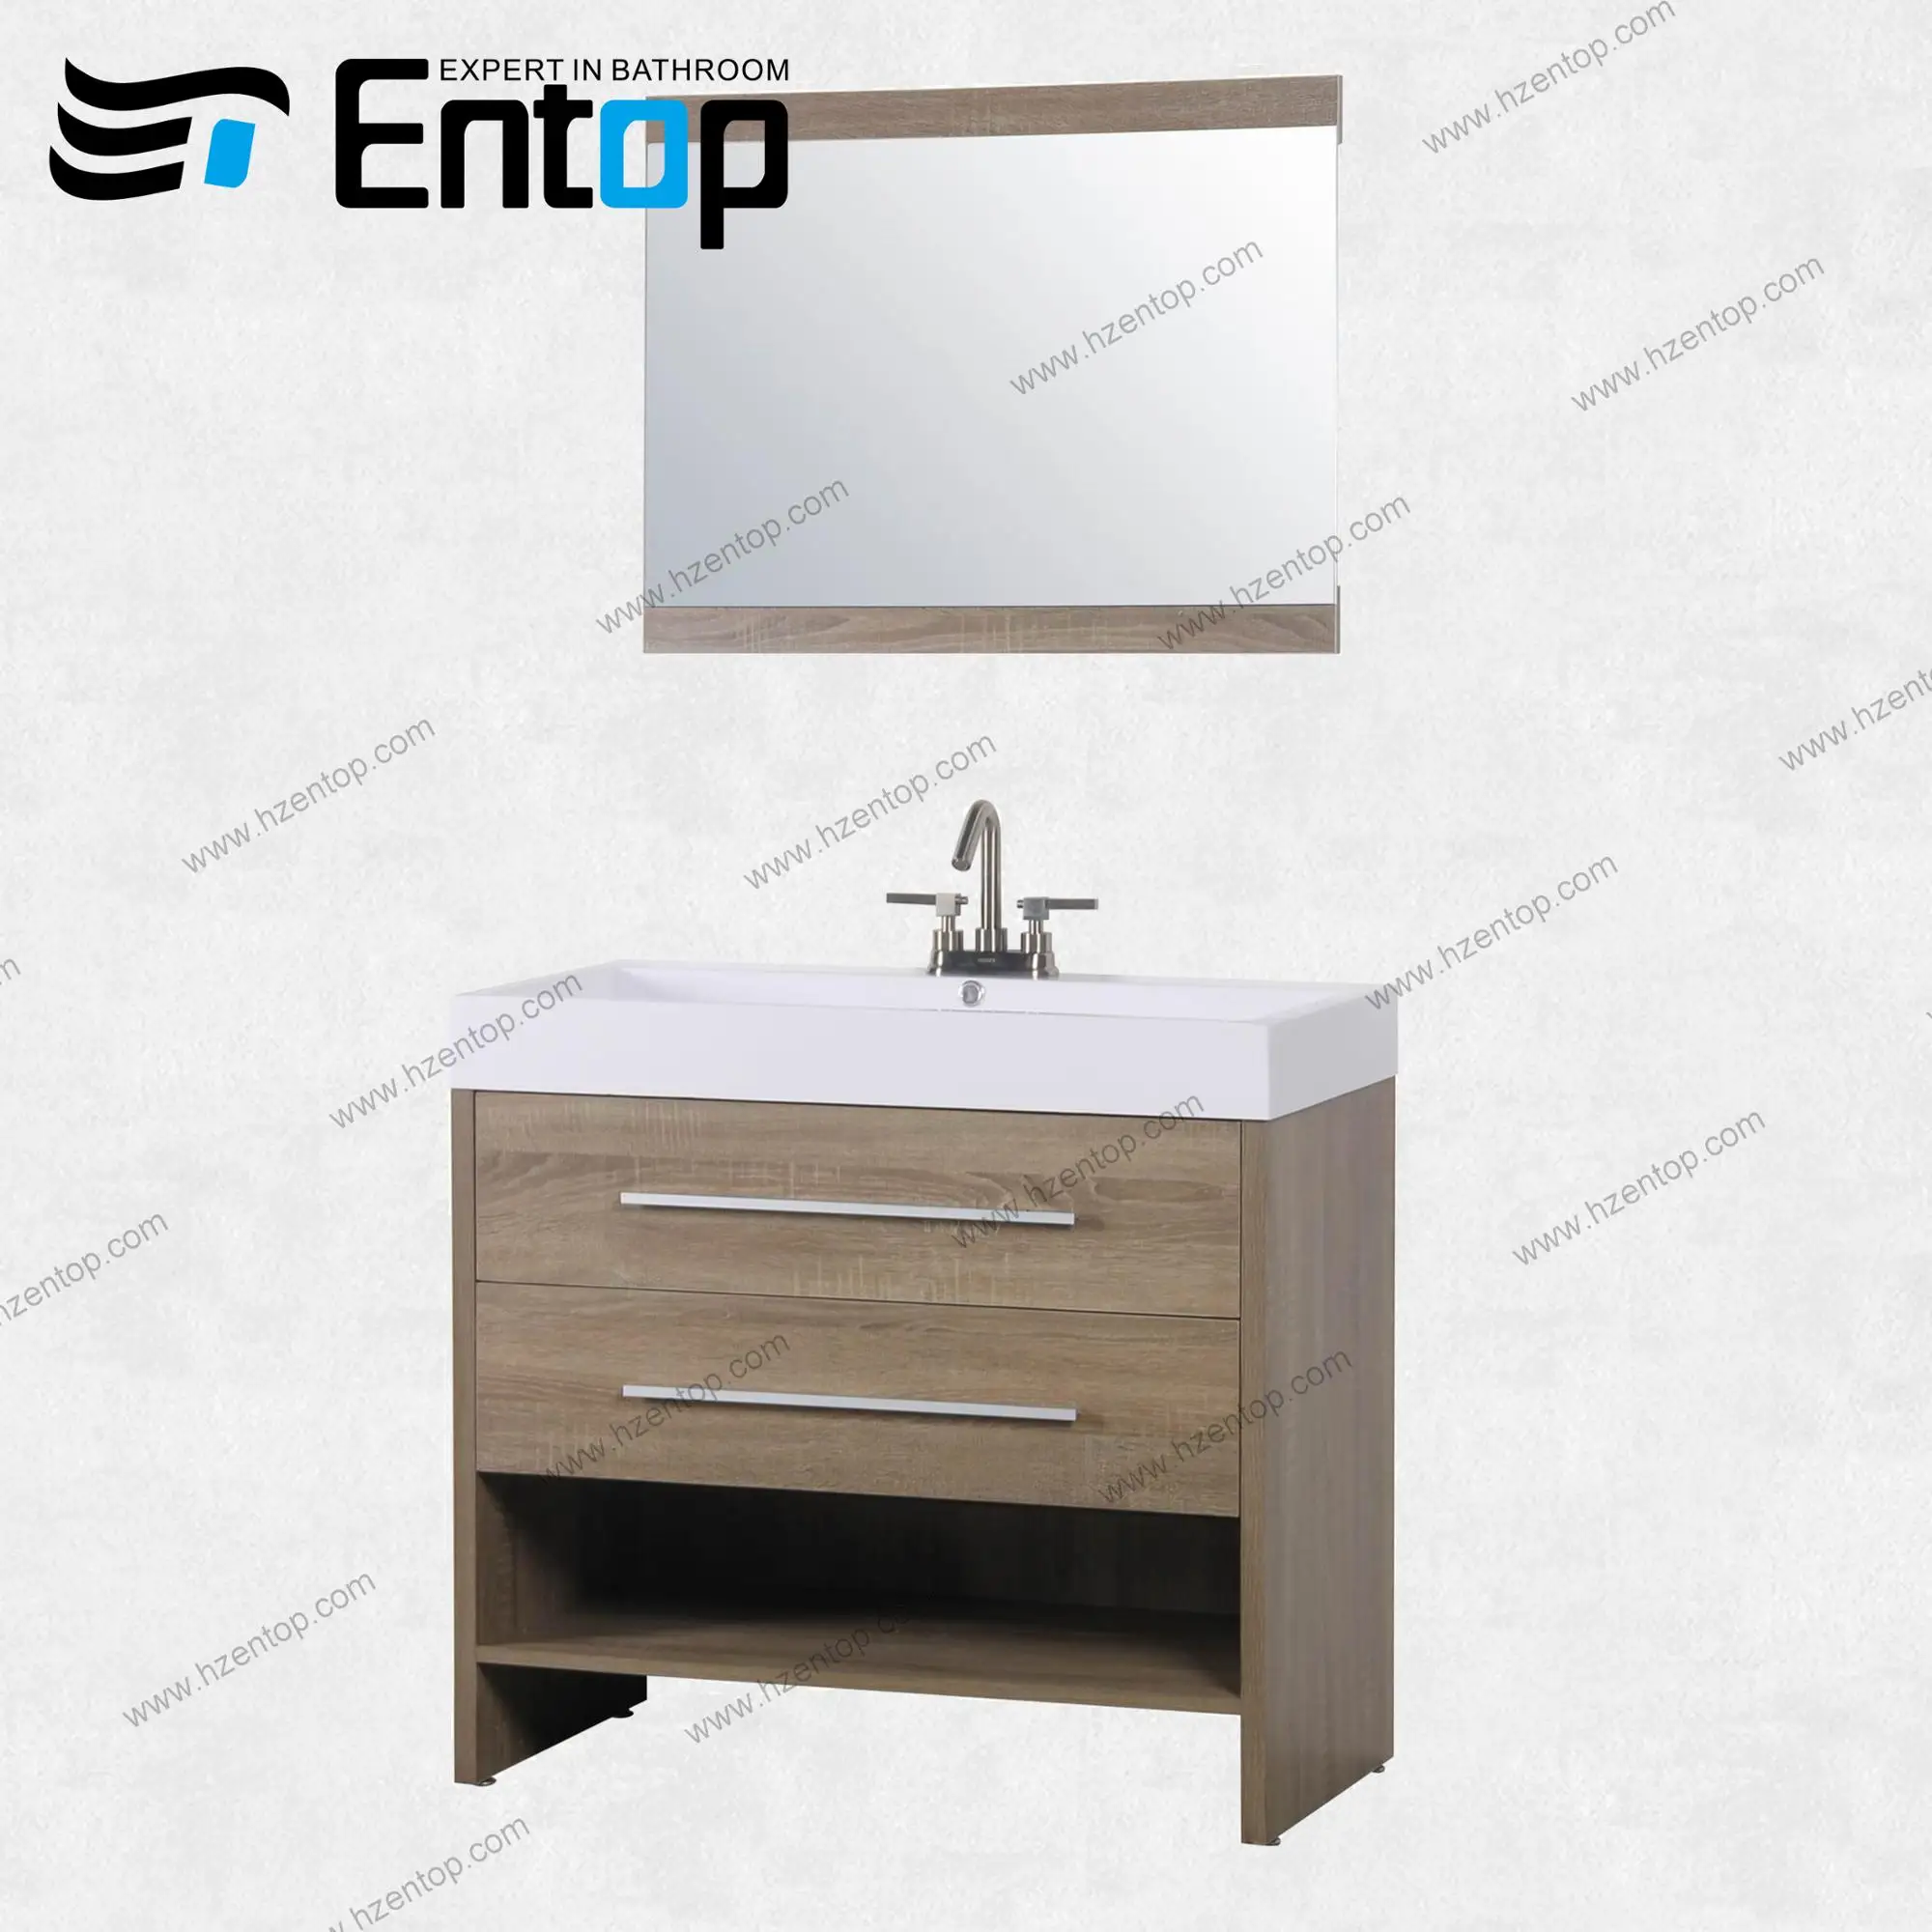 Entop Original Wood Color European Style Bathroom Vanity Cabinet Made In China Buy Original Wood Color Bathroom Cabinets Vanity